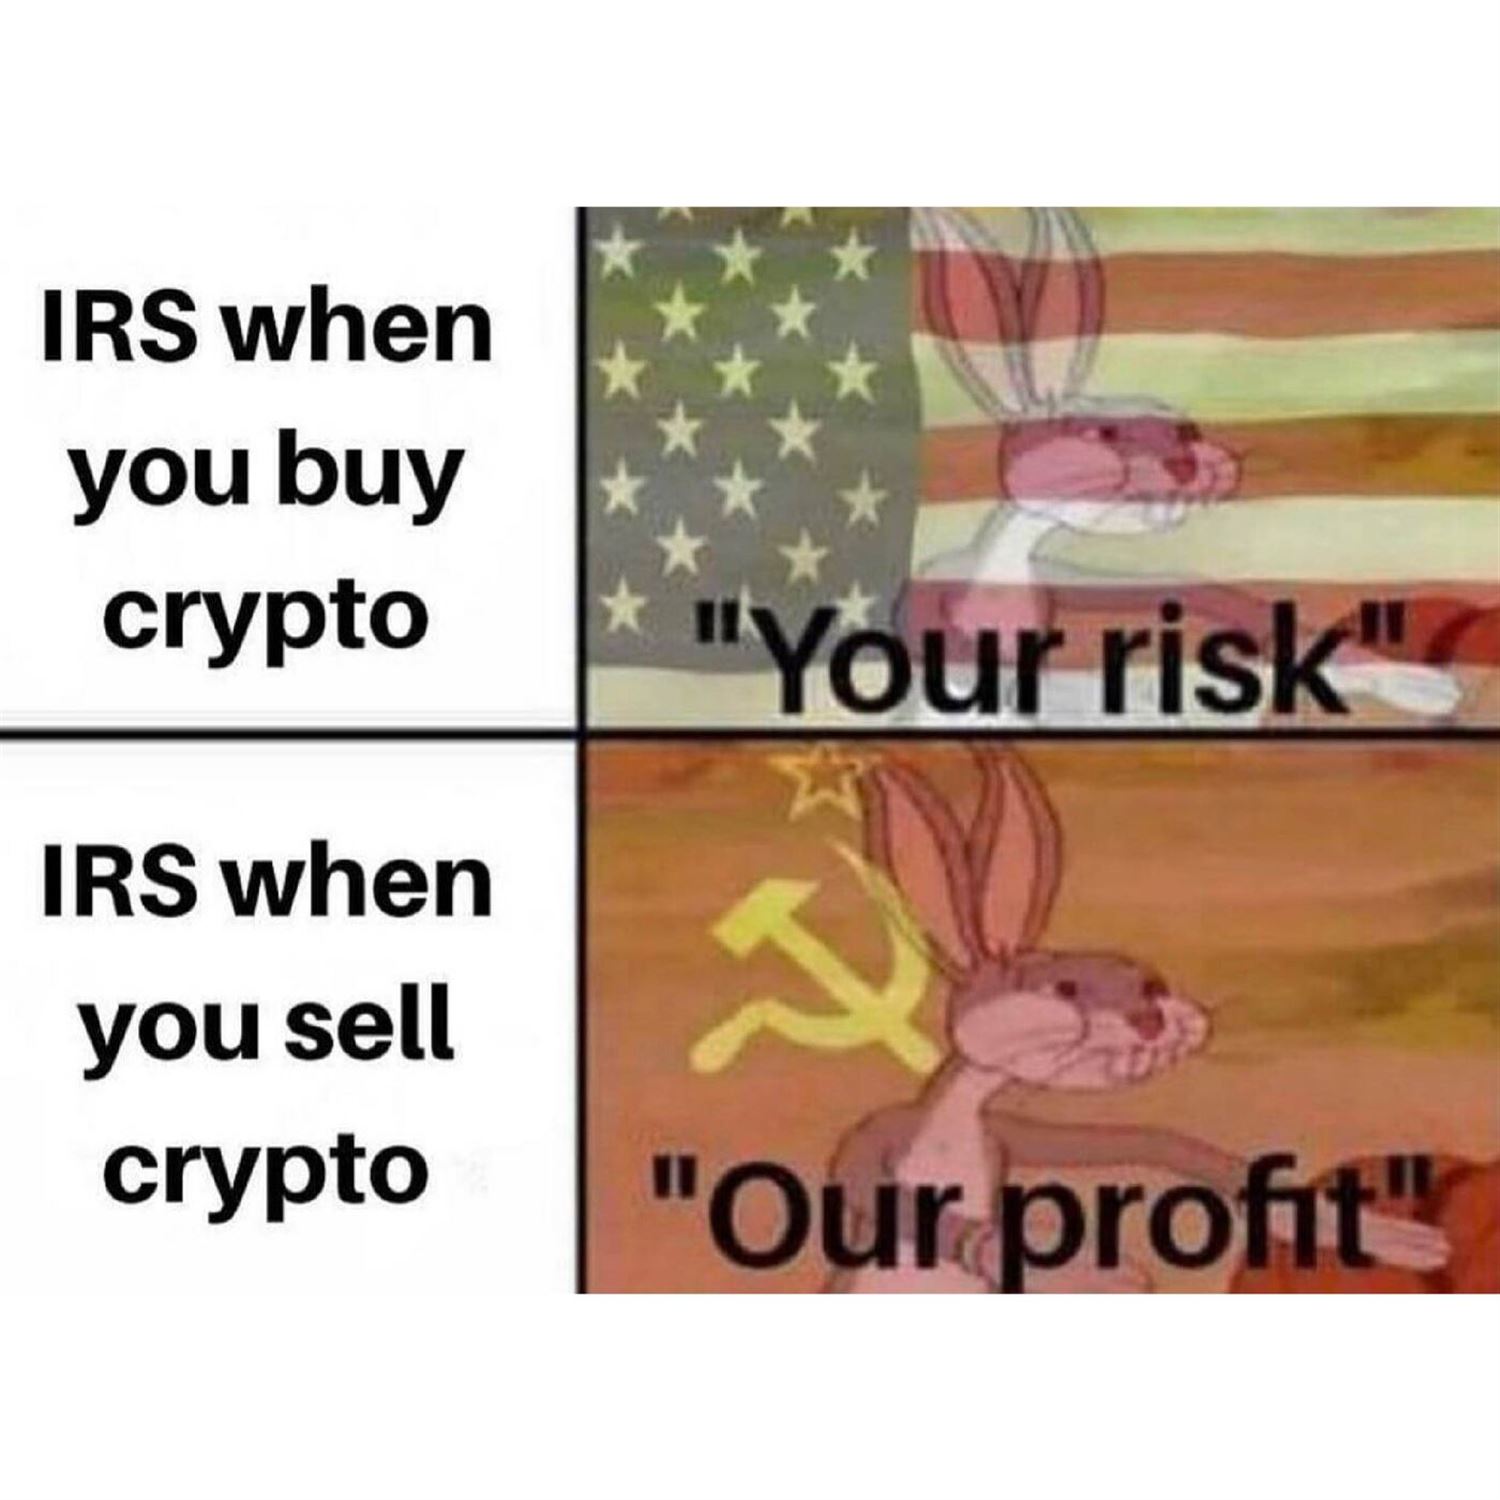 Crypto-stock analogy